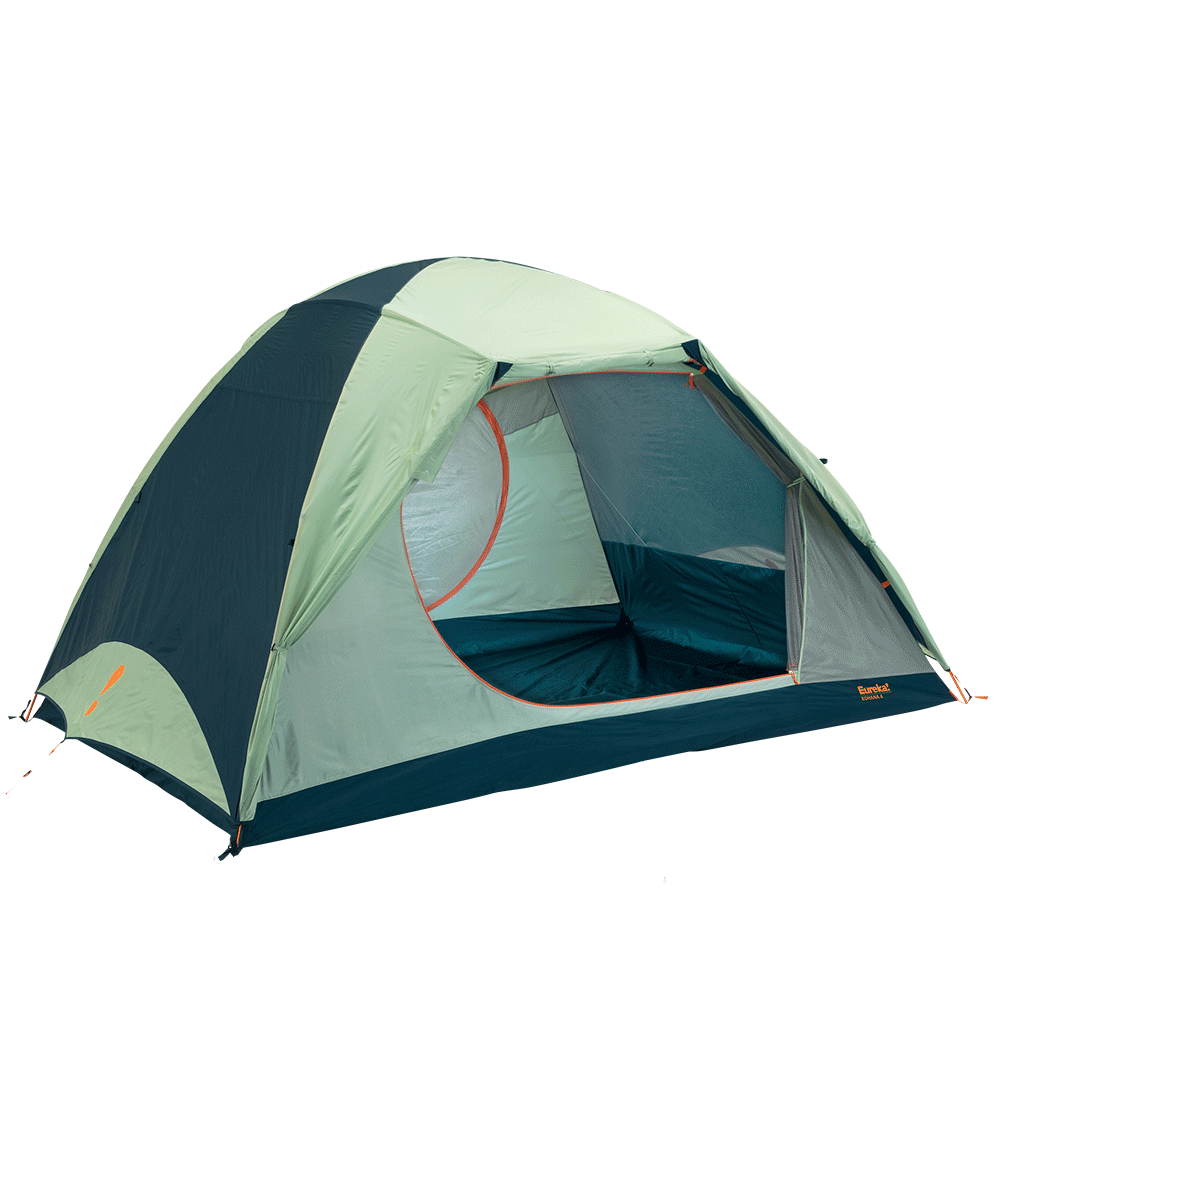 Kohana 4 Tent with rainfly on and awning